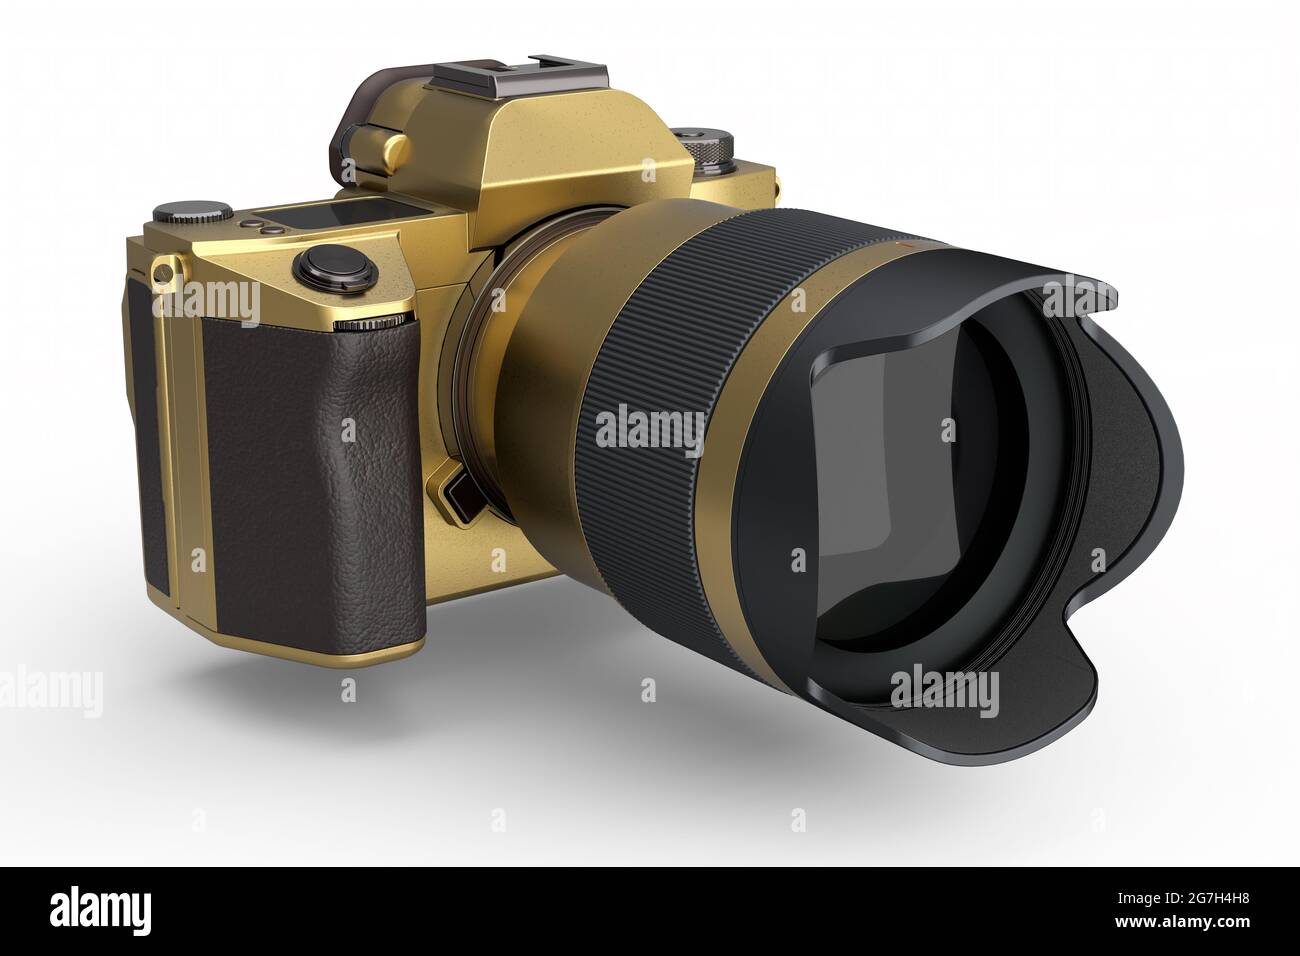 Concepto de una cámara DSLR inexistente con lente macro aislada sobre un fondo blanco. Renderización 3D e ilustración de equipo de fotografía profesional para Foto de stock